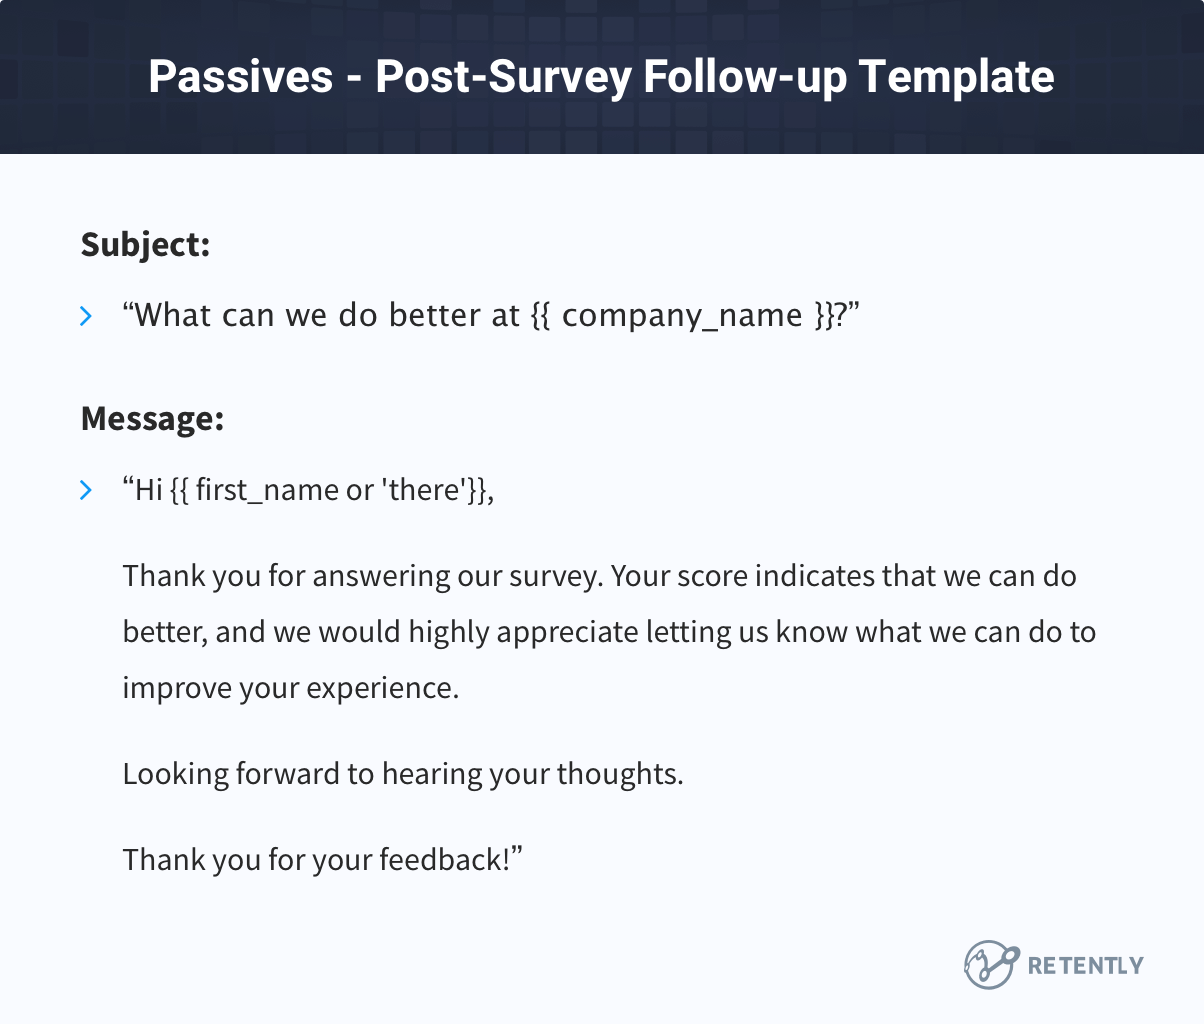 Passives: Post-survey follow-up template